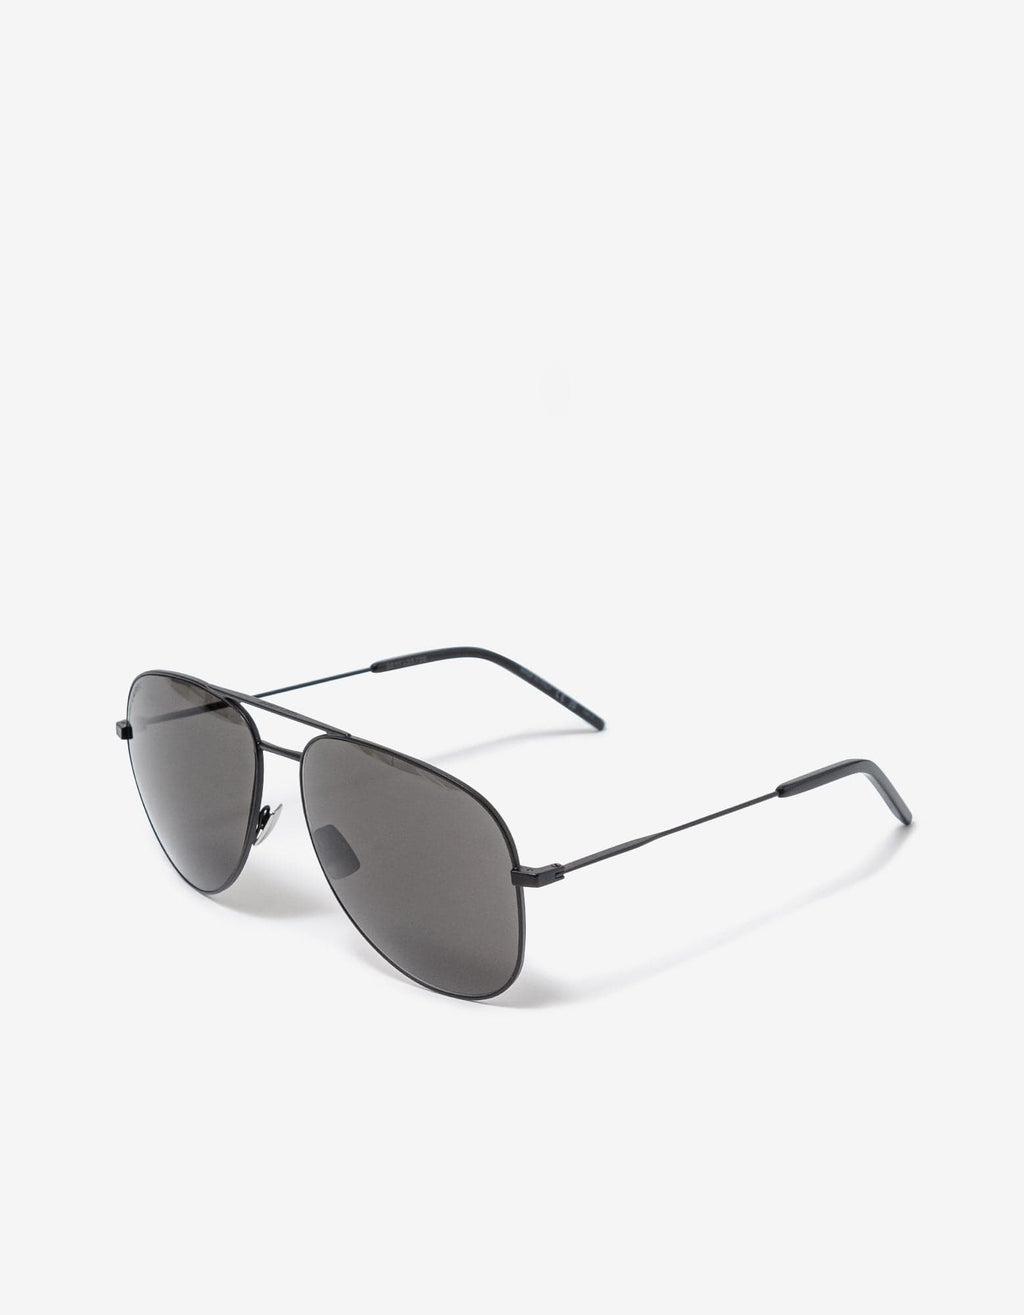 Saint Laurent Black Classic 11 Sunglasses